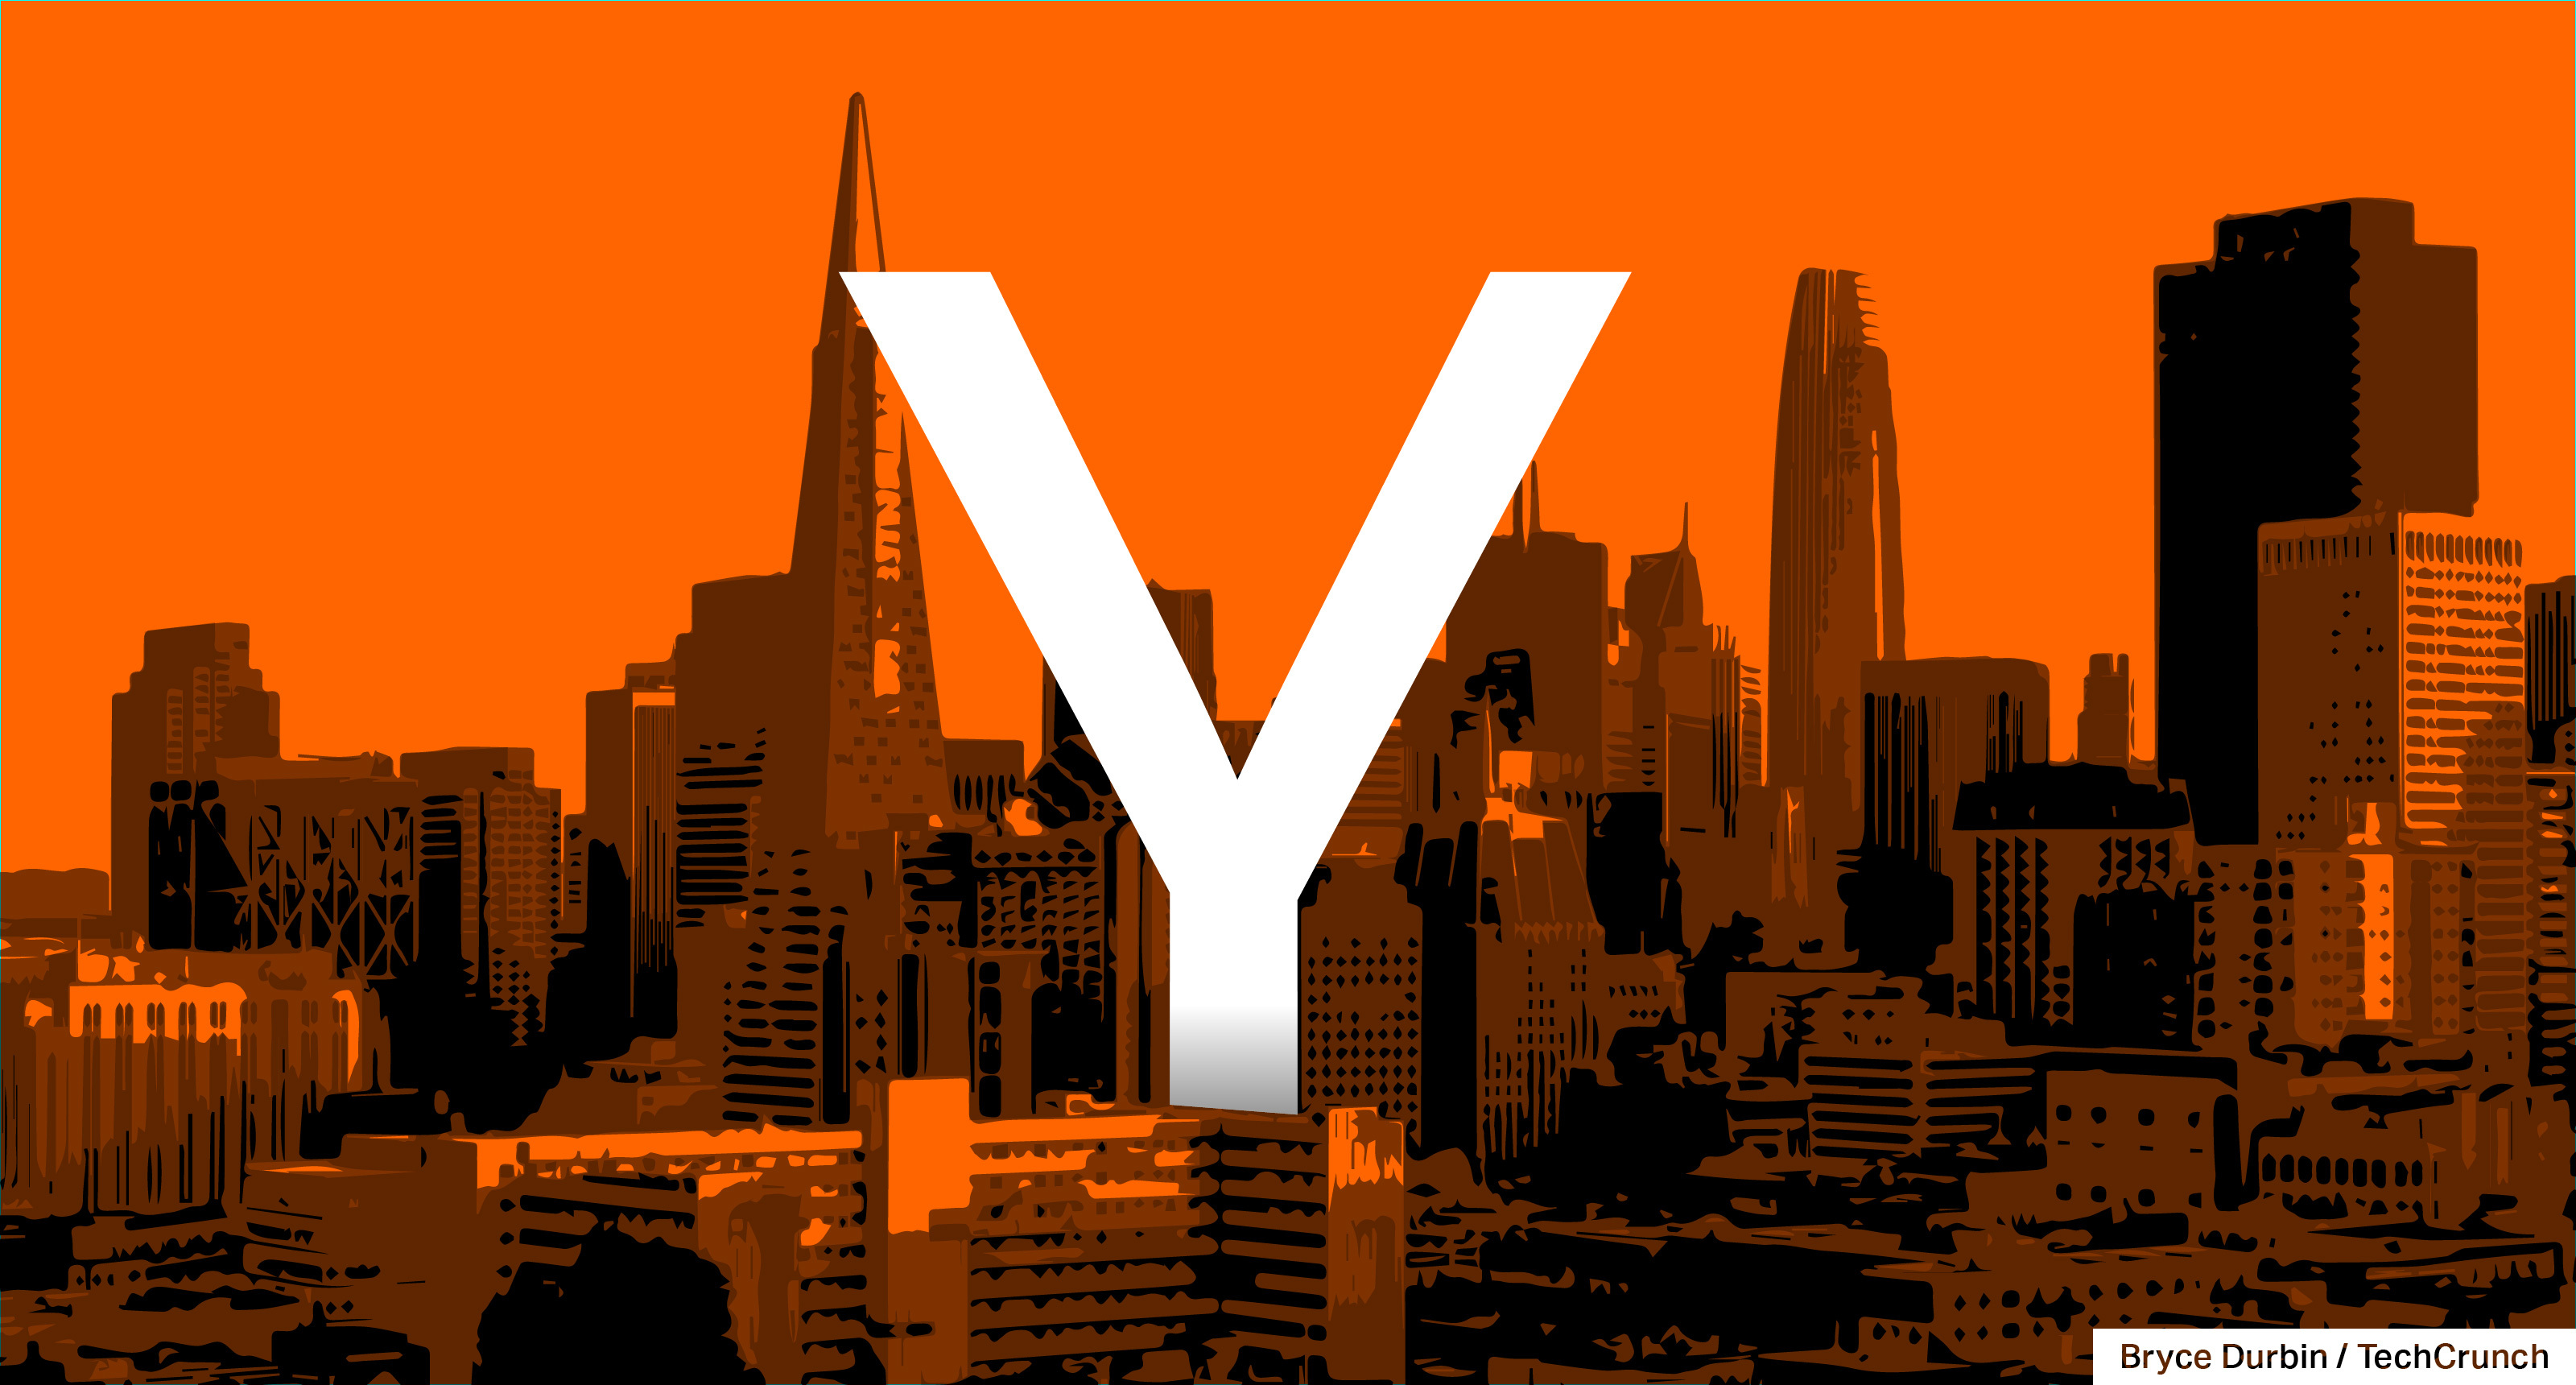 Large white "Y" overlaid on an orange-tinted skyline of San Francisco